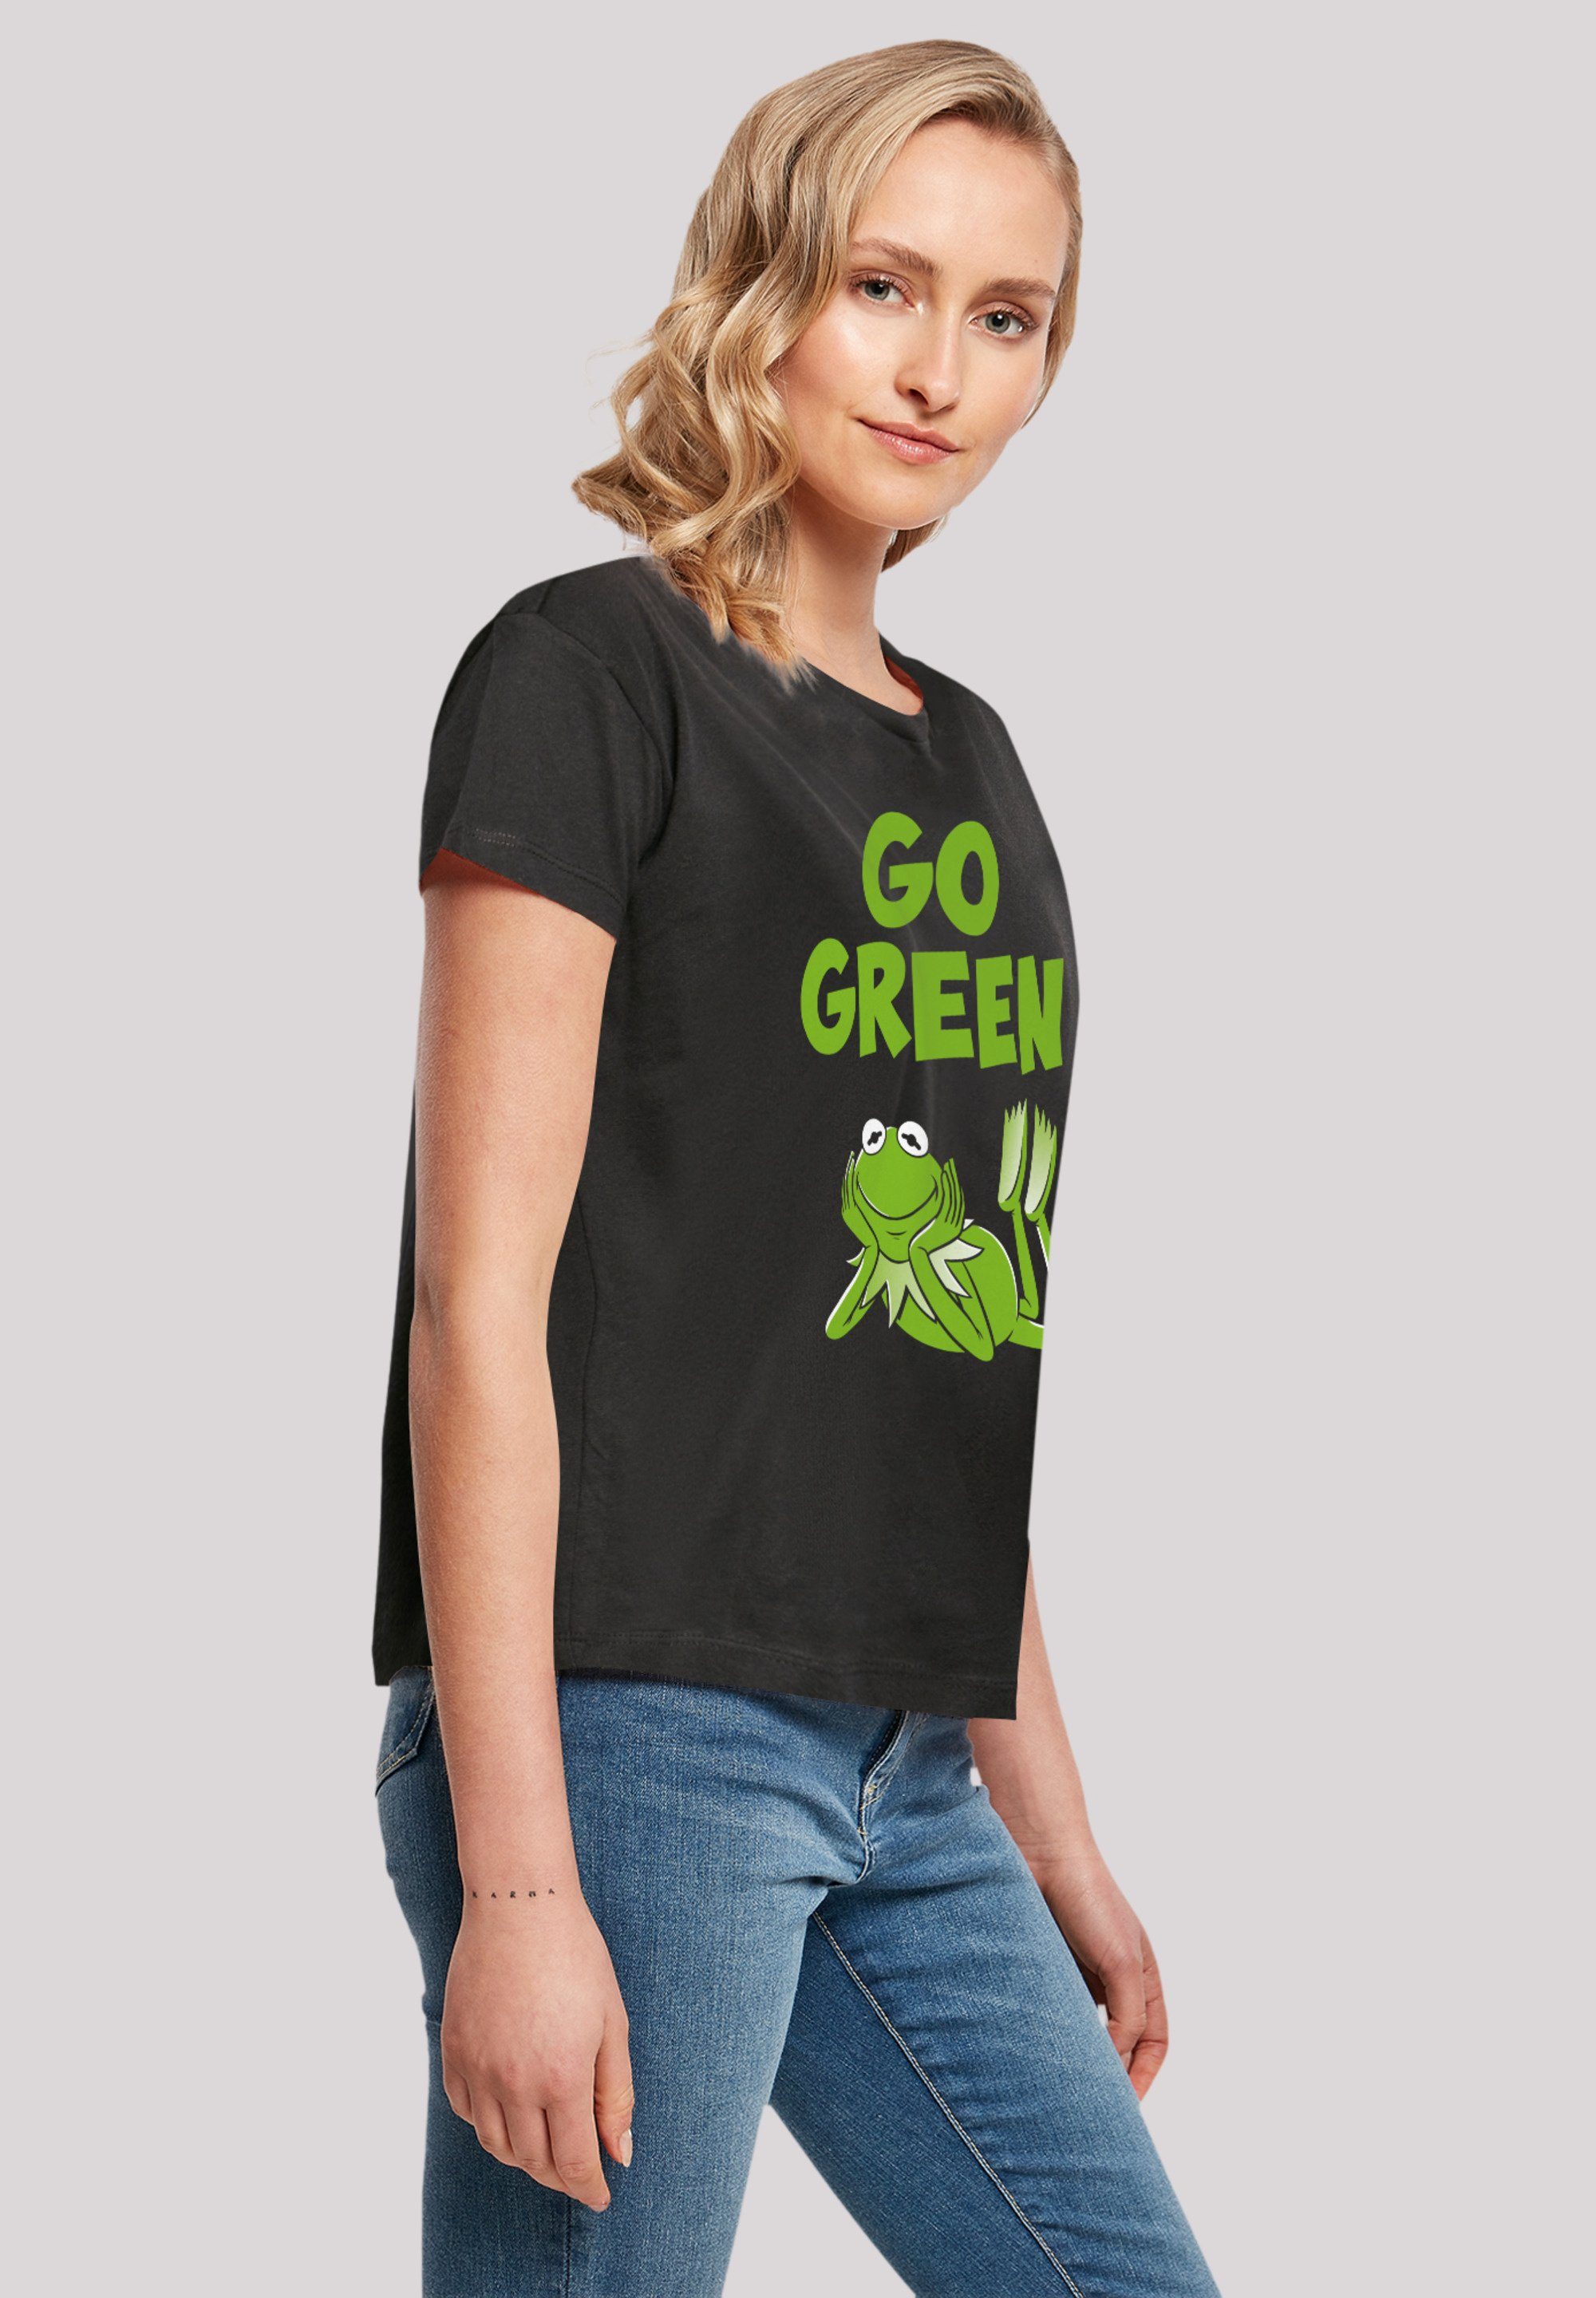 Muppets Green Premium Qualität F4NT4STIC Go T-Shirt Disney